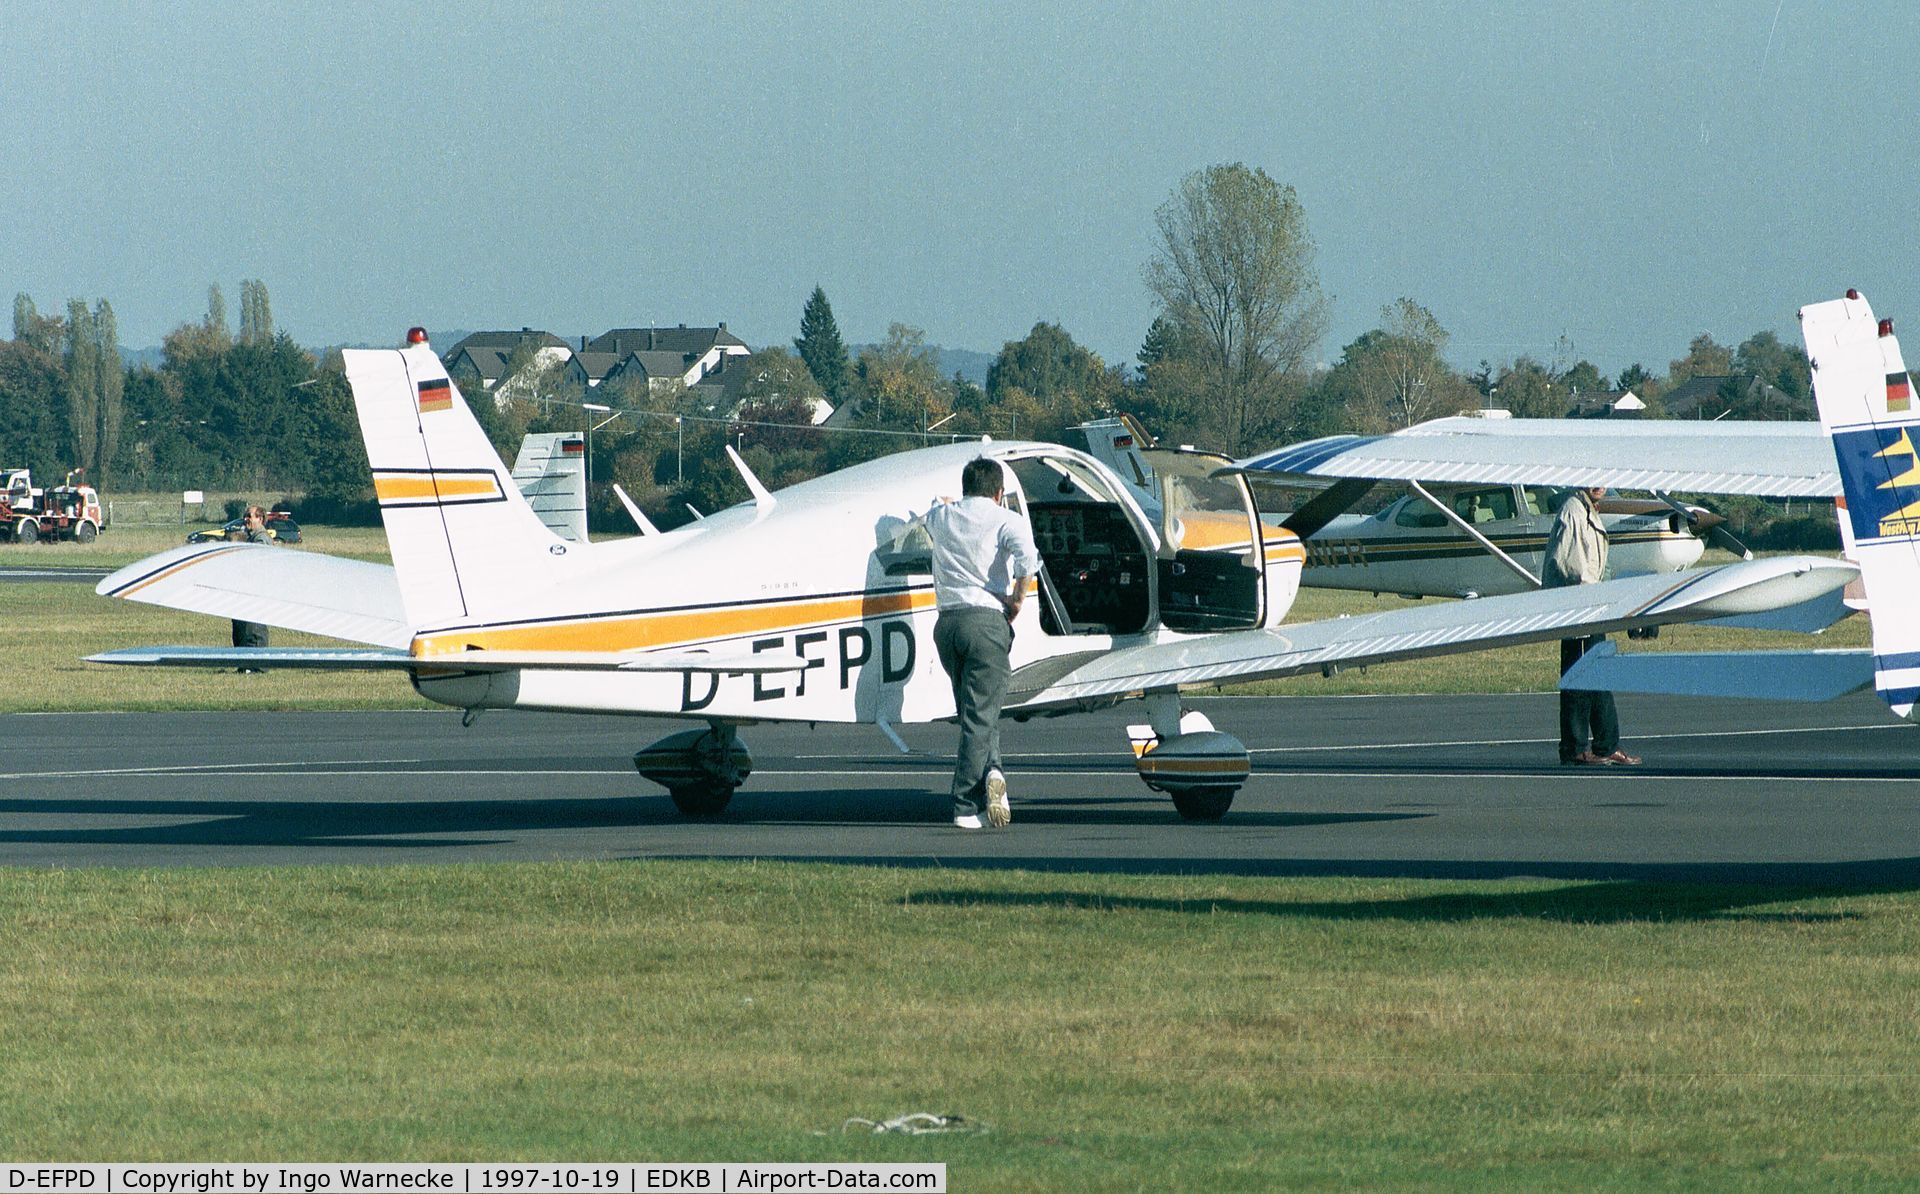 D-EFPD, 1973 Piper PA-28-180 Challenger C/N 28-7305121, Piper PA-28-180 Cherokee Challenger at Bonn-Hangelar airfield